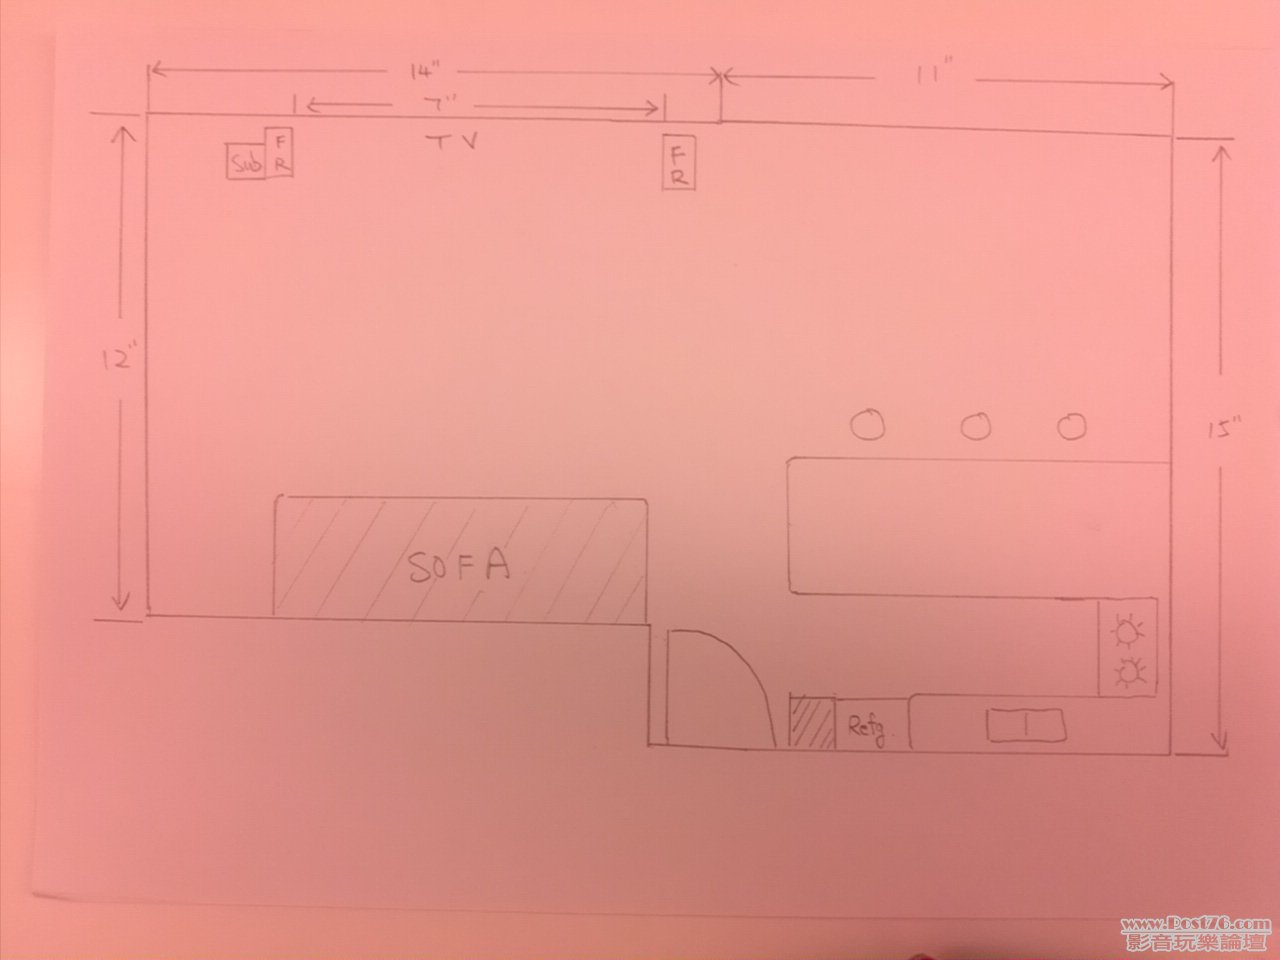 Floor plan.jpg